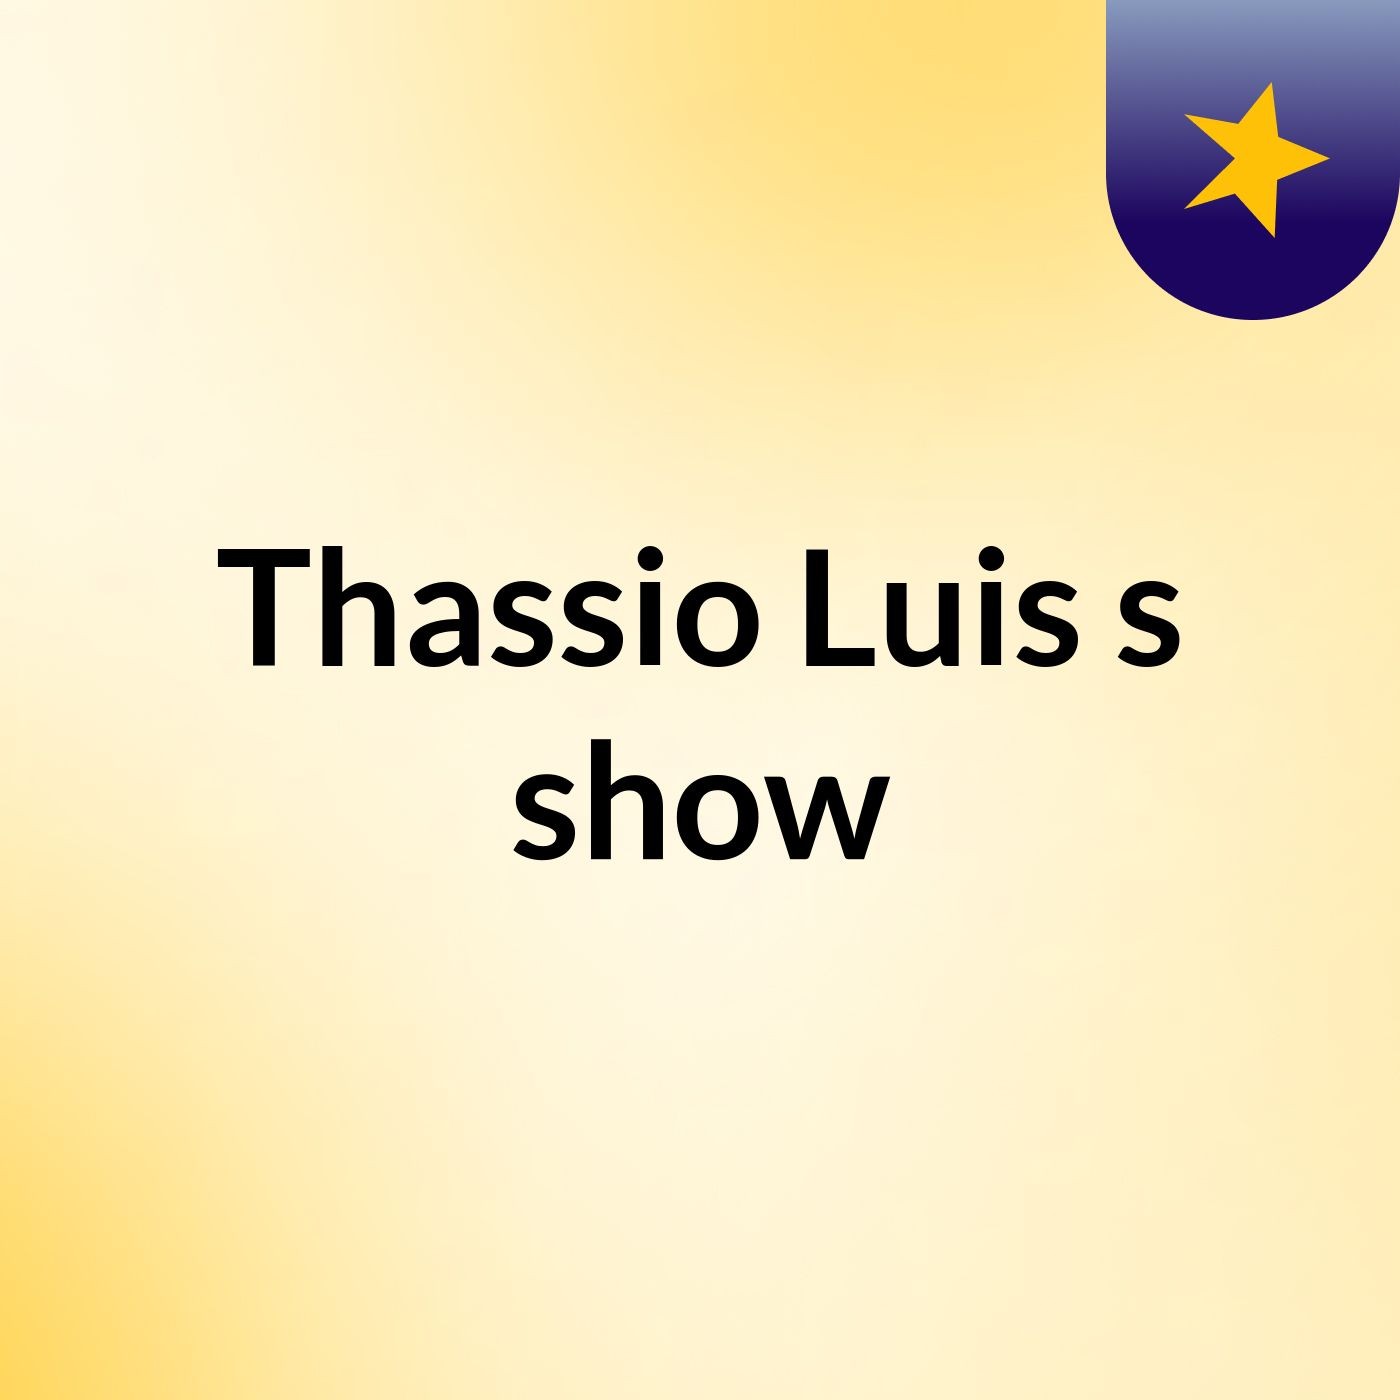 Thassio Luis's show